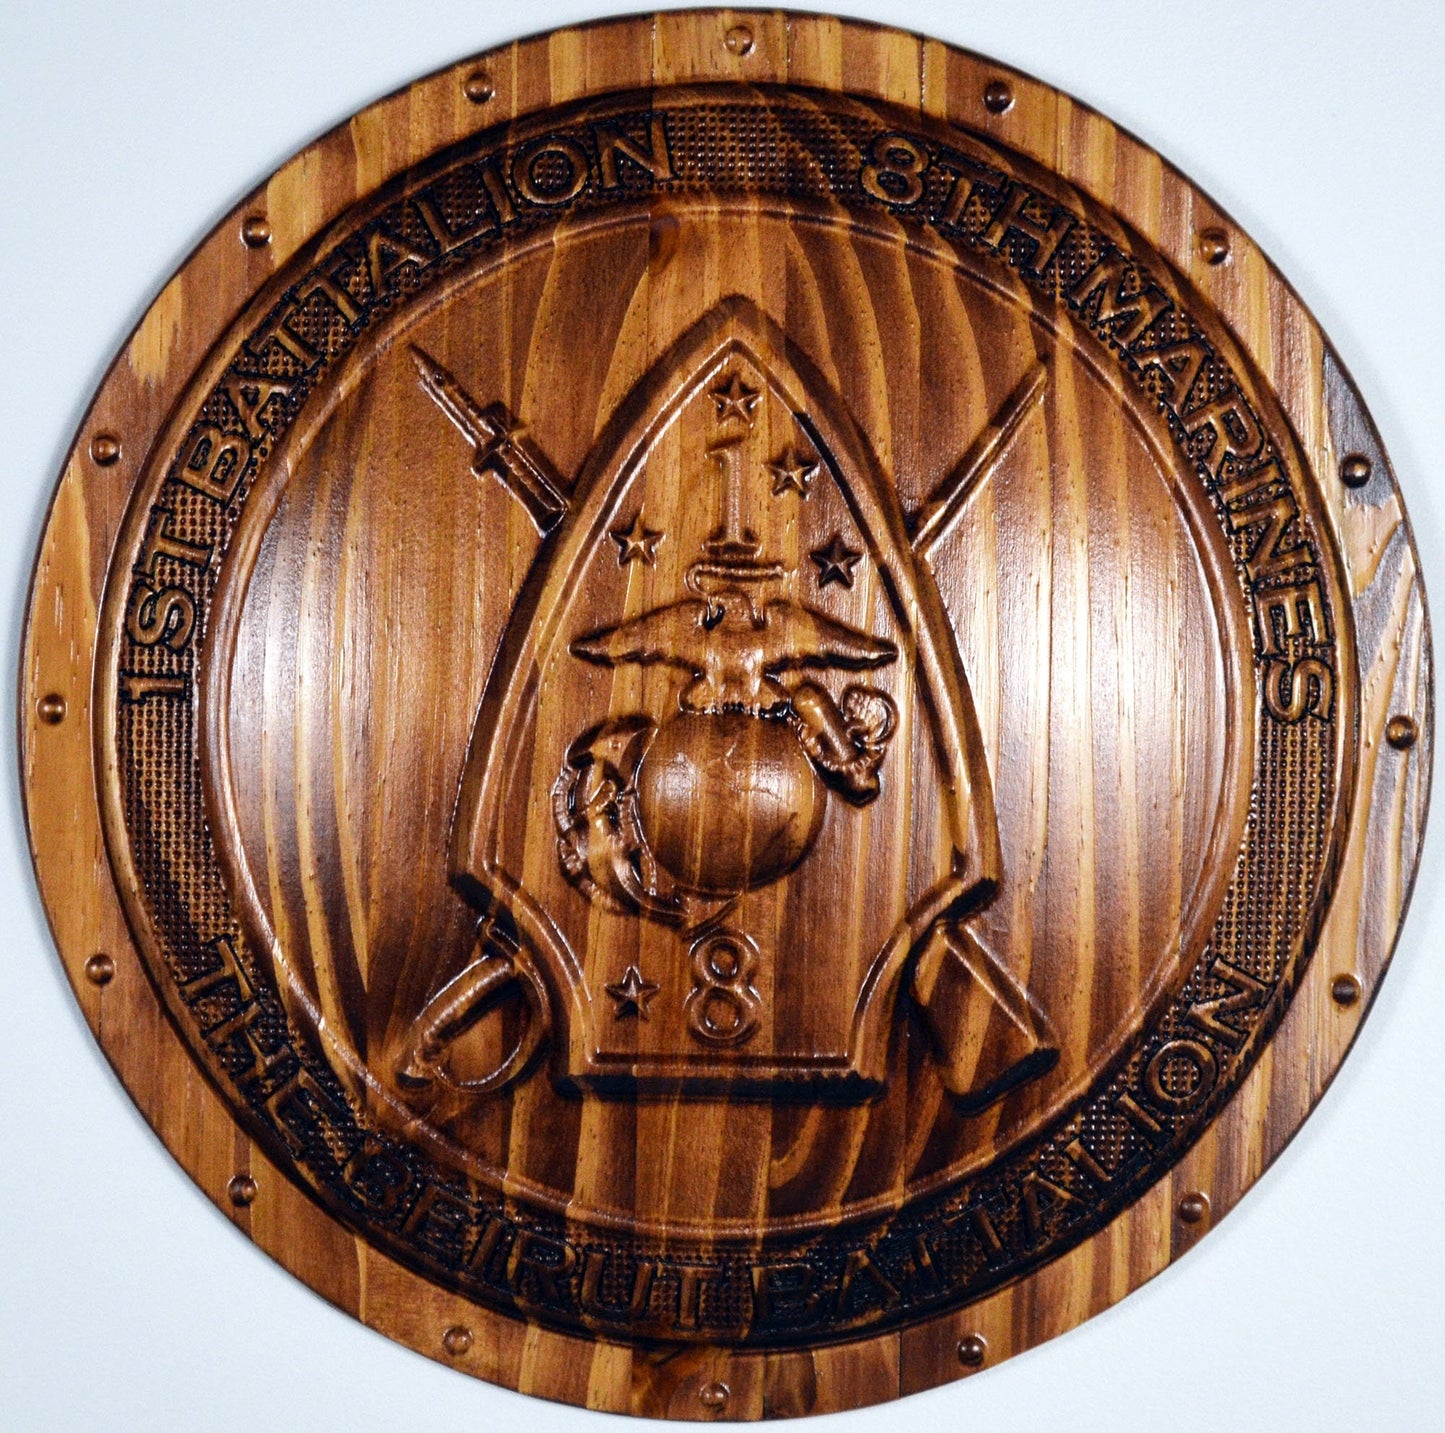 USMC 1st Battalion, 8th Marines, Unit Emblem, US Marine Corps, military plaque